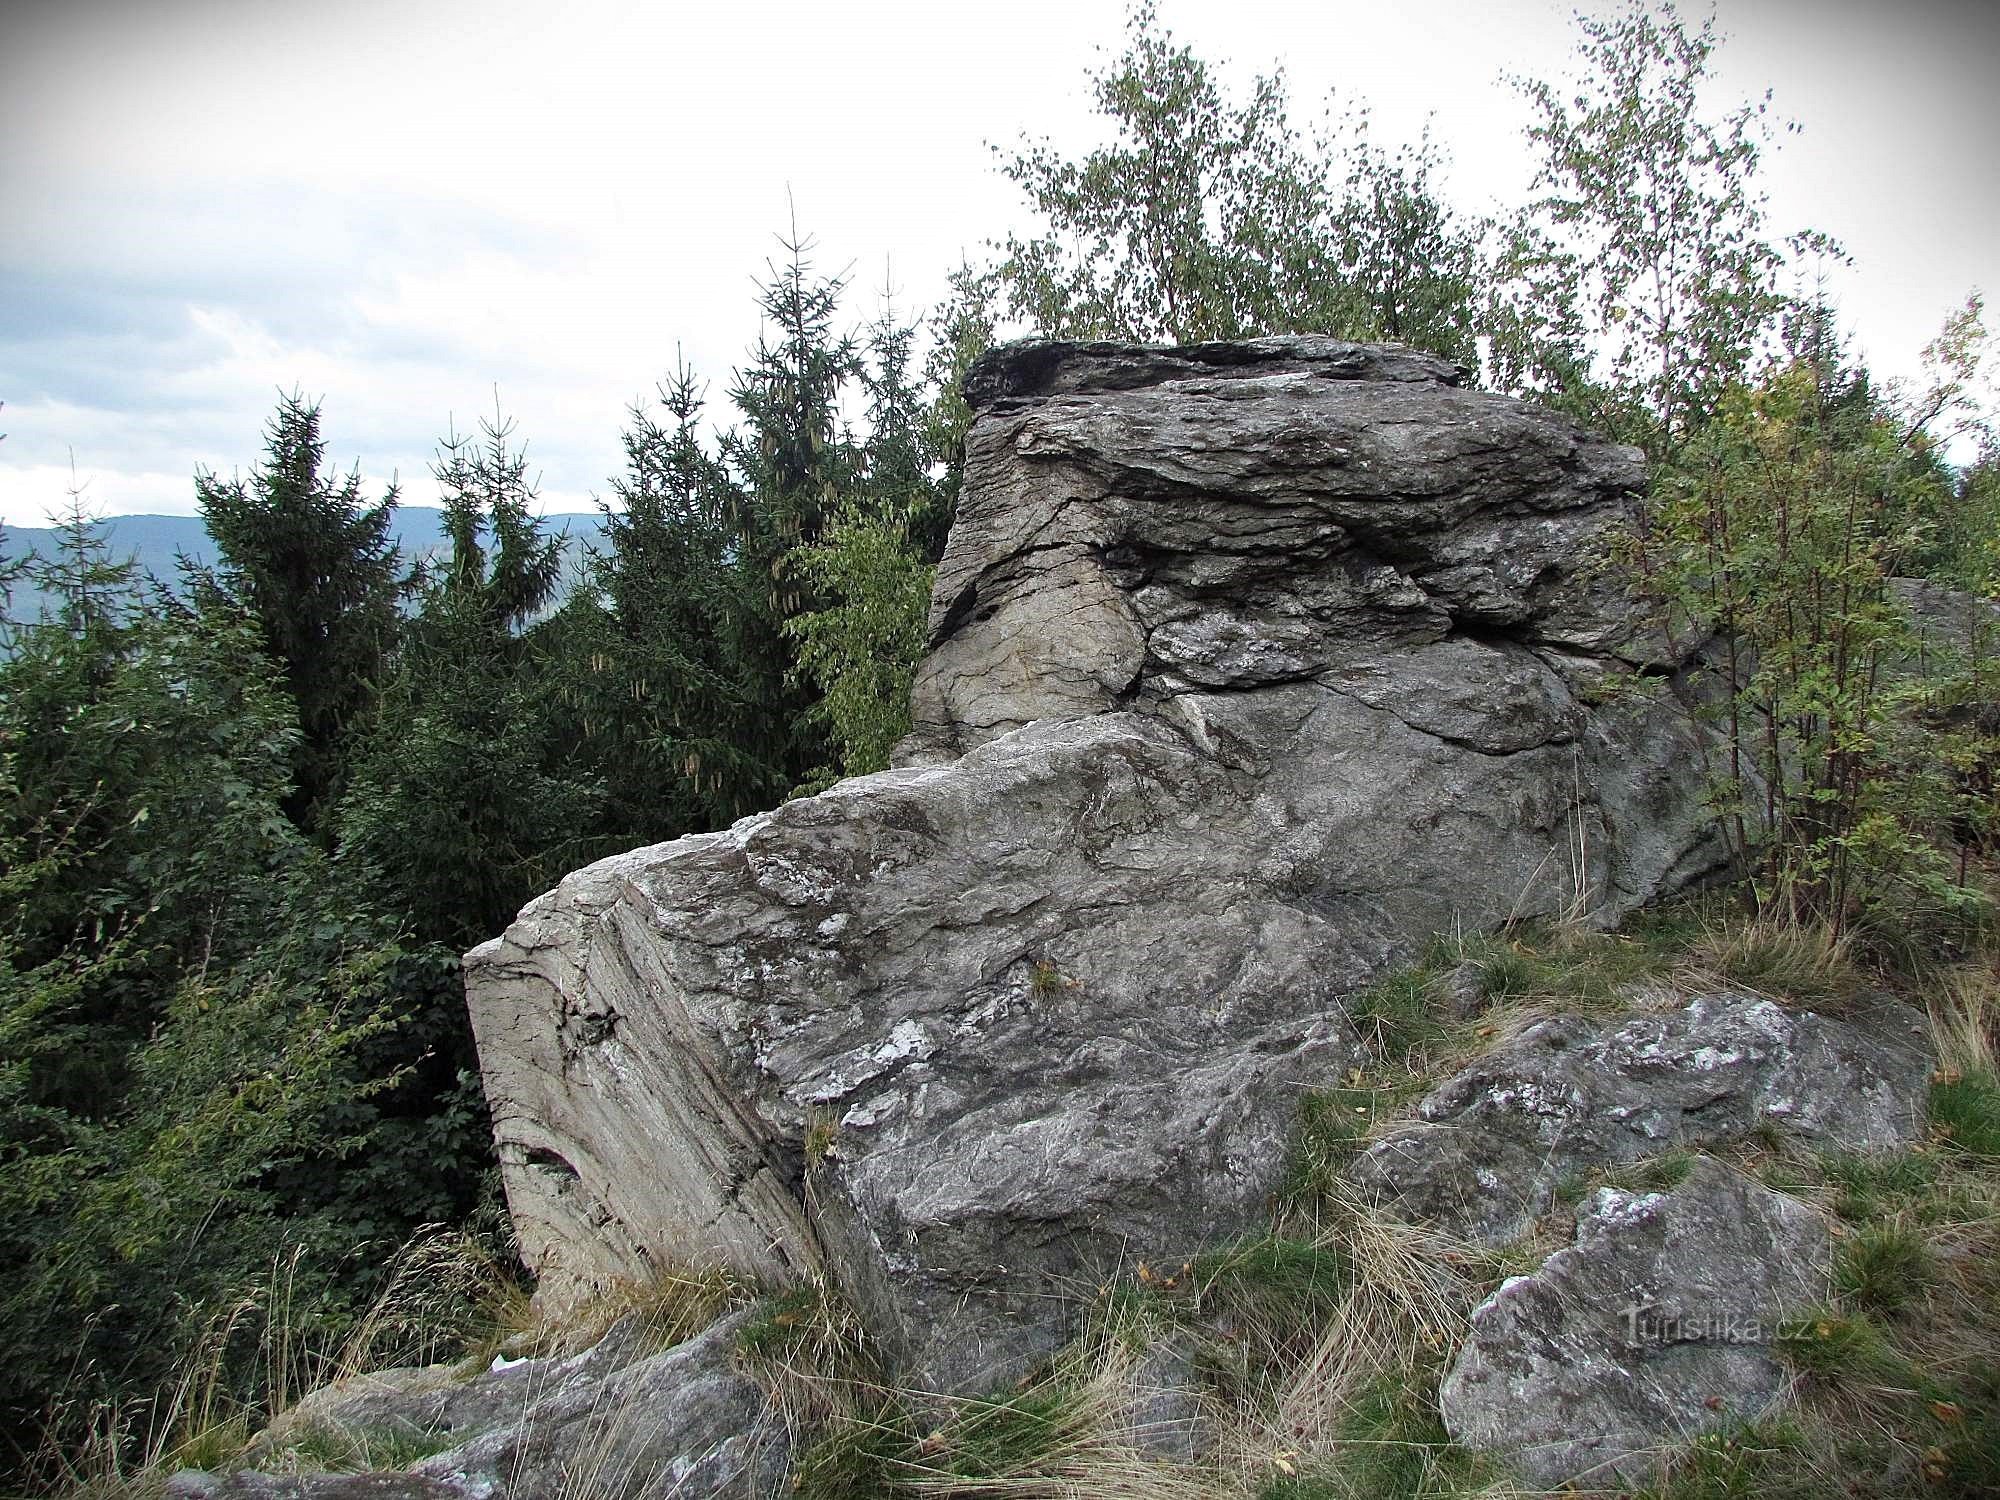 Jesenice rock viewpoints - 10. Rock at Ferdinandov